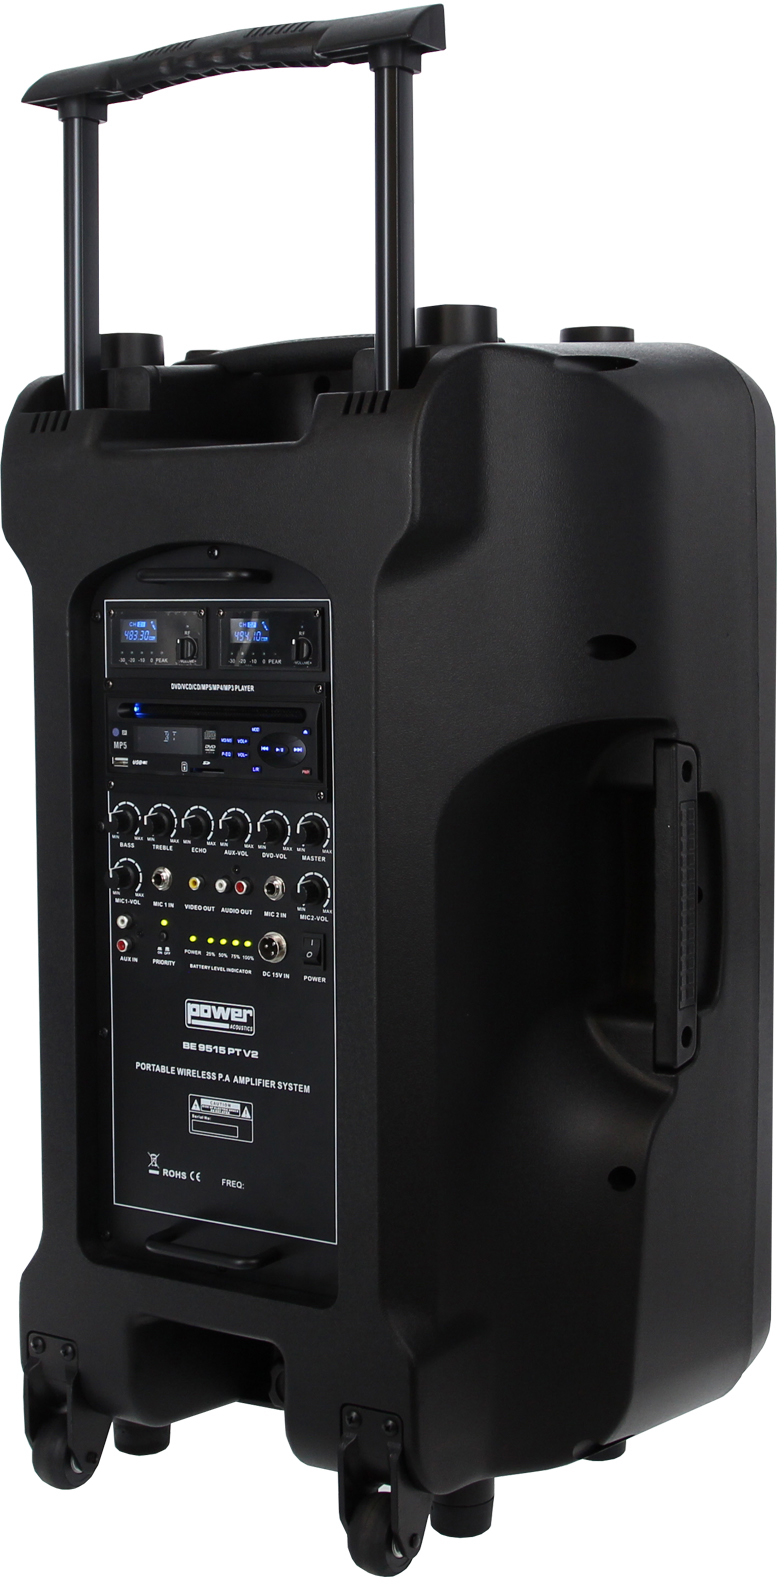 Power Acoustics Be 9515 Pt V2 - Portable PA system - Variation 5